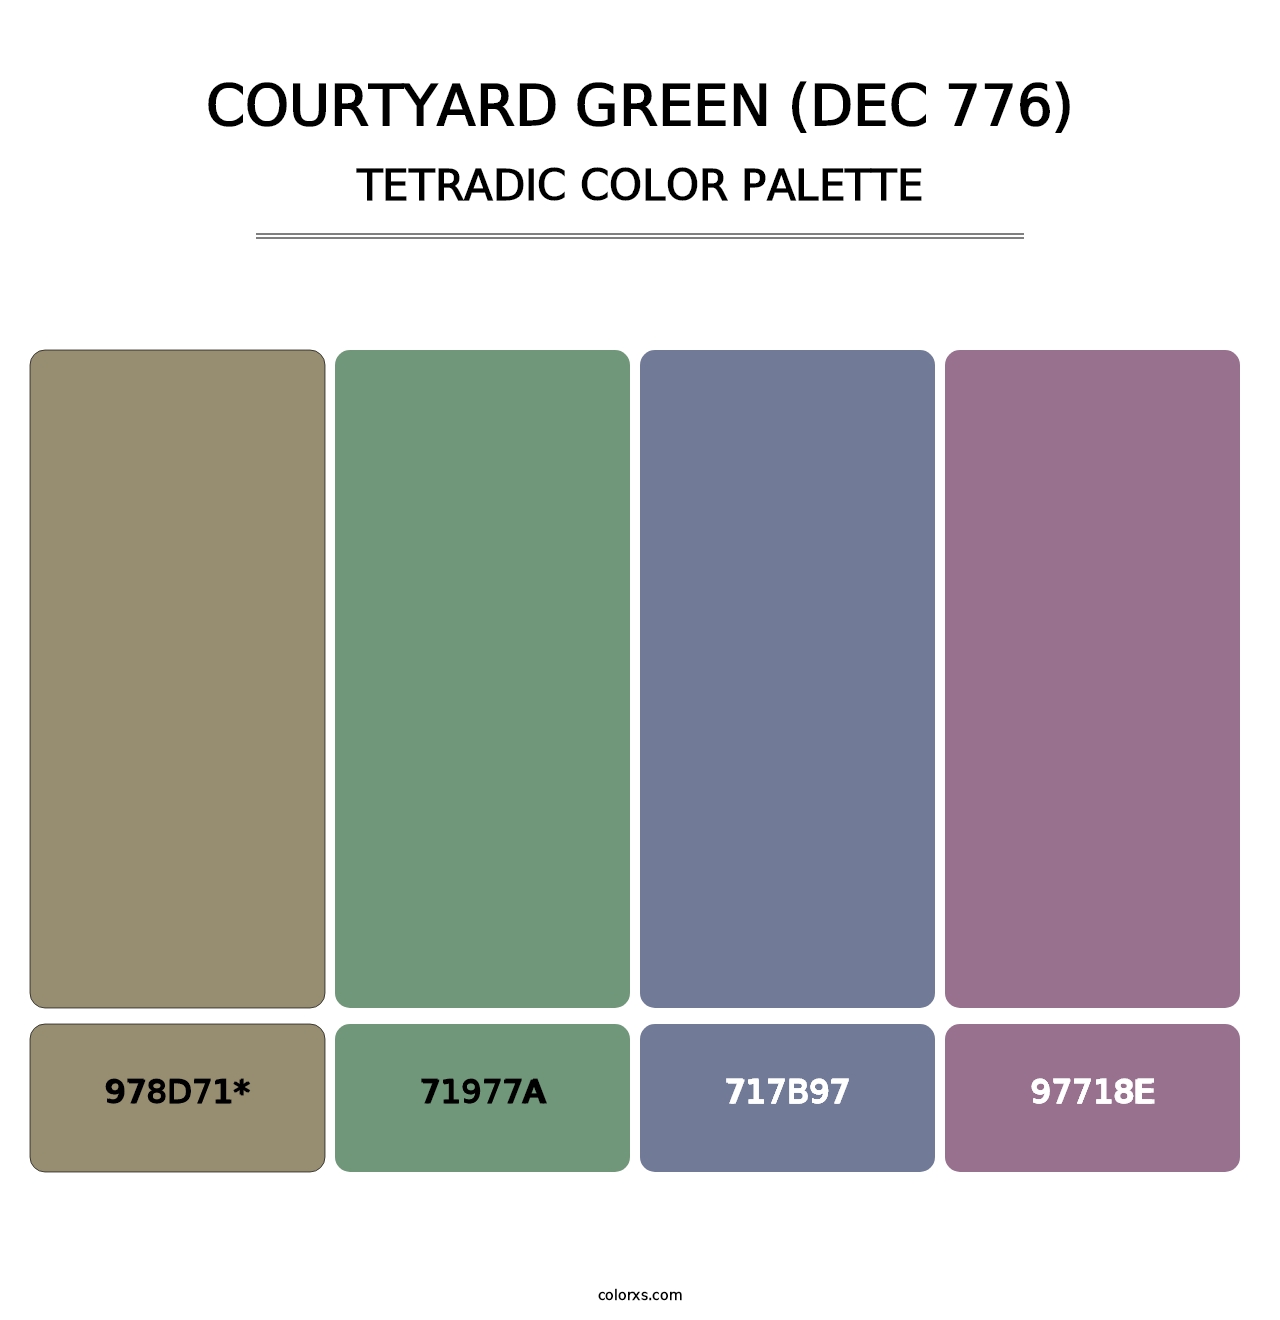 Courtyard Green (DEC 776) - Tetradic Color Palette